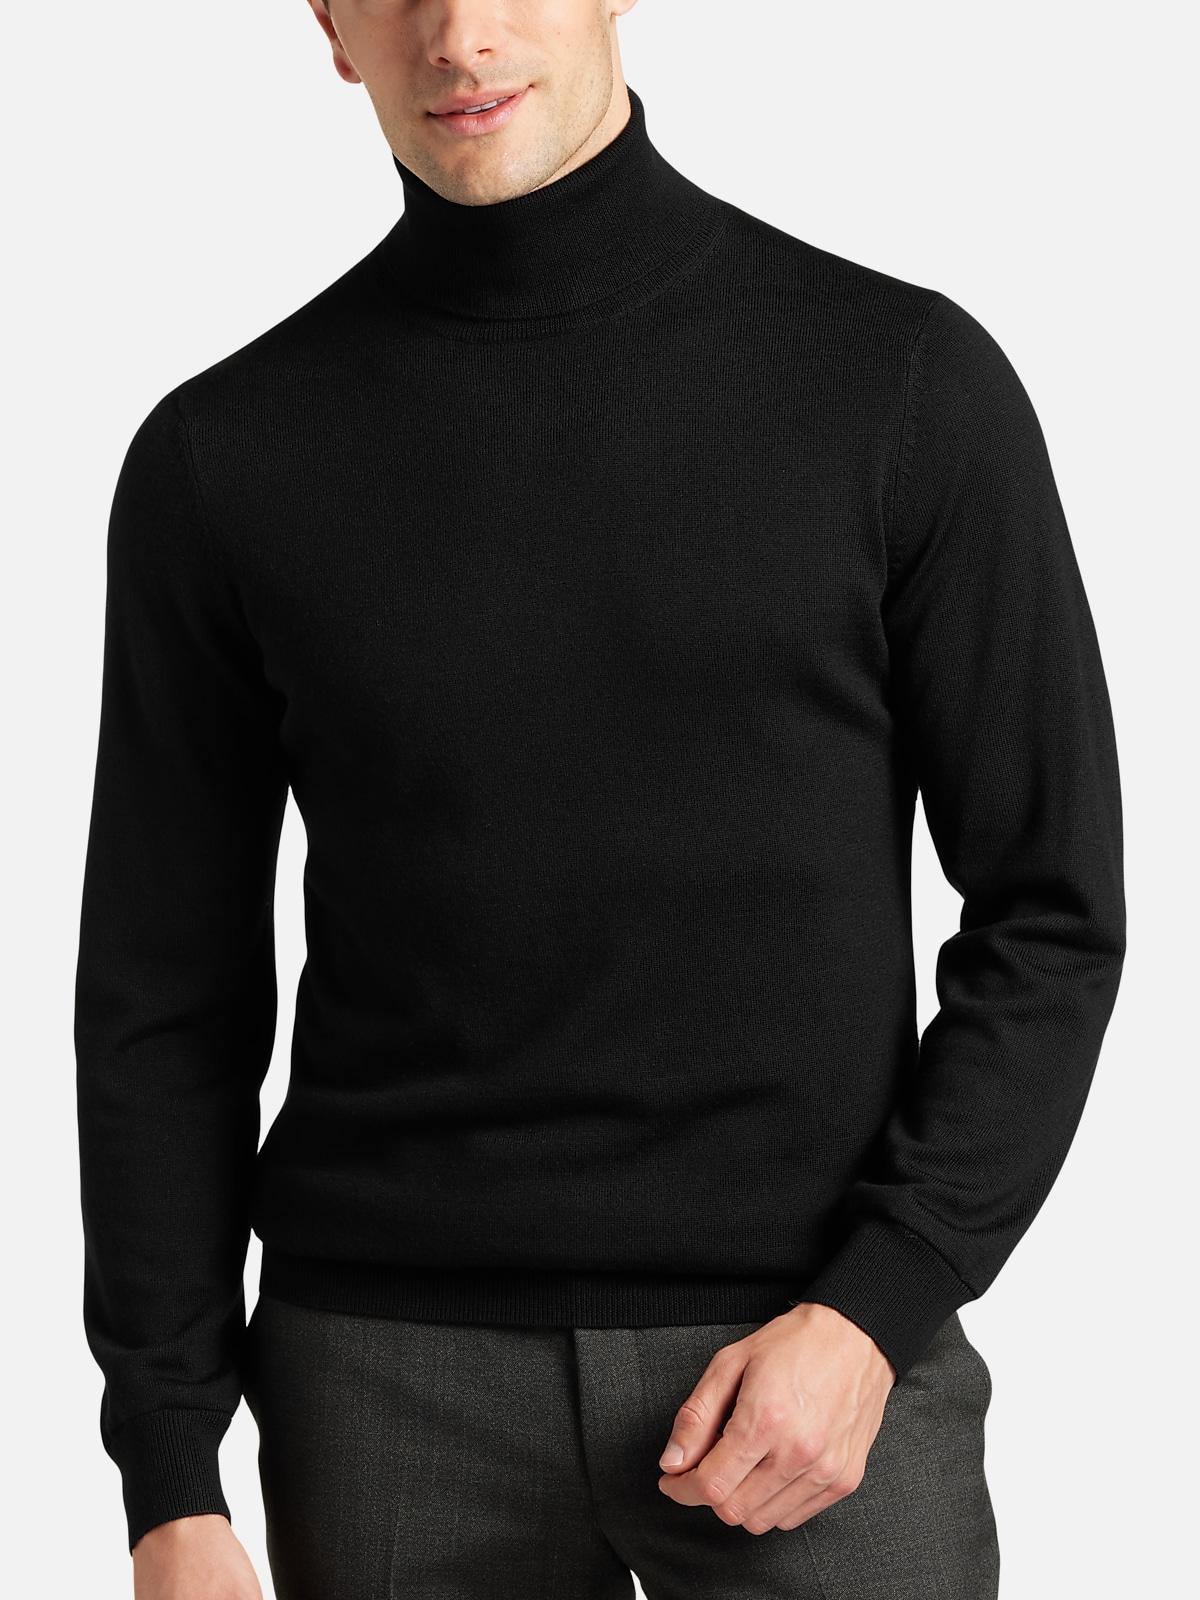 Joseph Abboud Modern Fit Turtleneck Merino Wool Sweater | New Arrivals ...